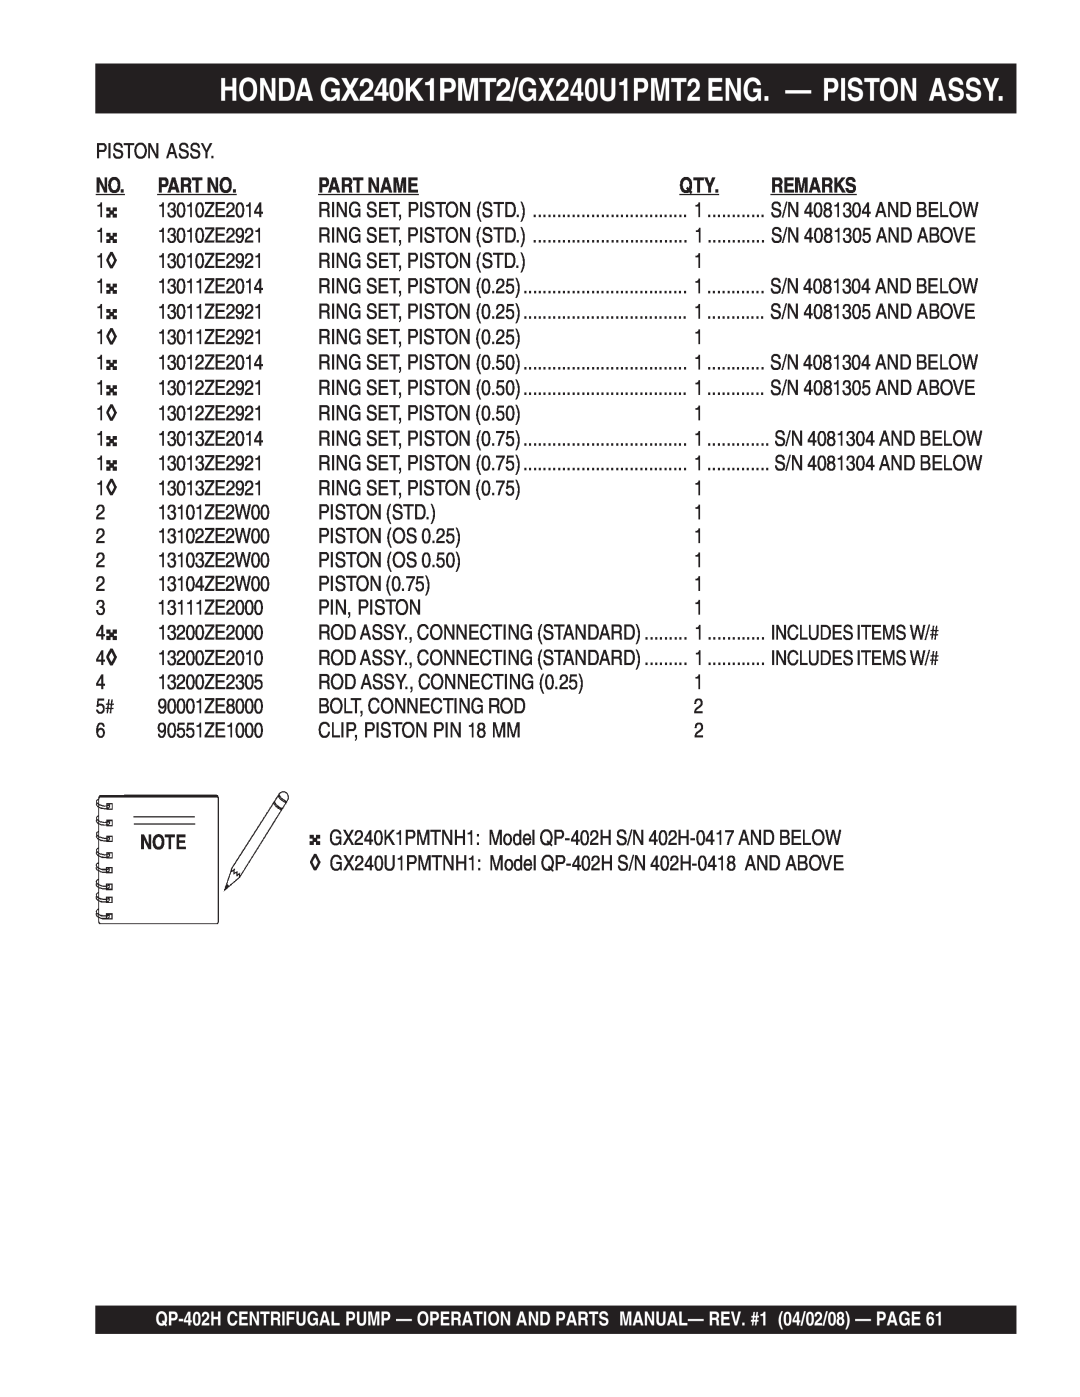 Multiquip qp-402h manual HONDA GX240K1PMT2/GX240U1PMT2 ENG. - PISTON ASSY, Piston Assy, Part Name, Remarks 